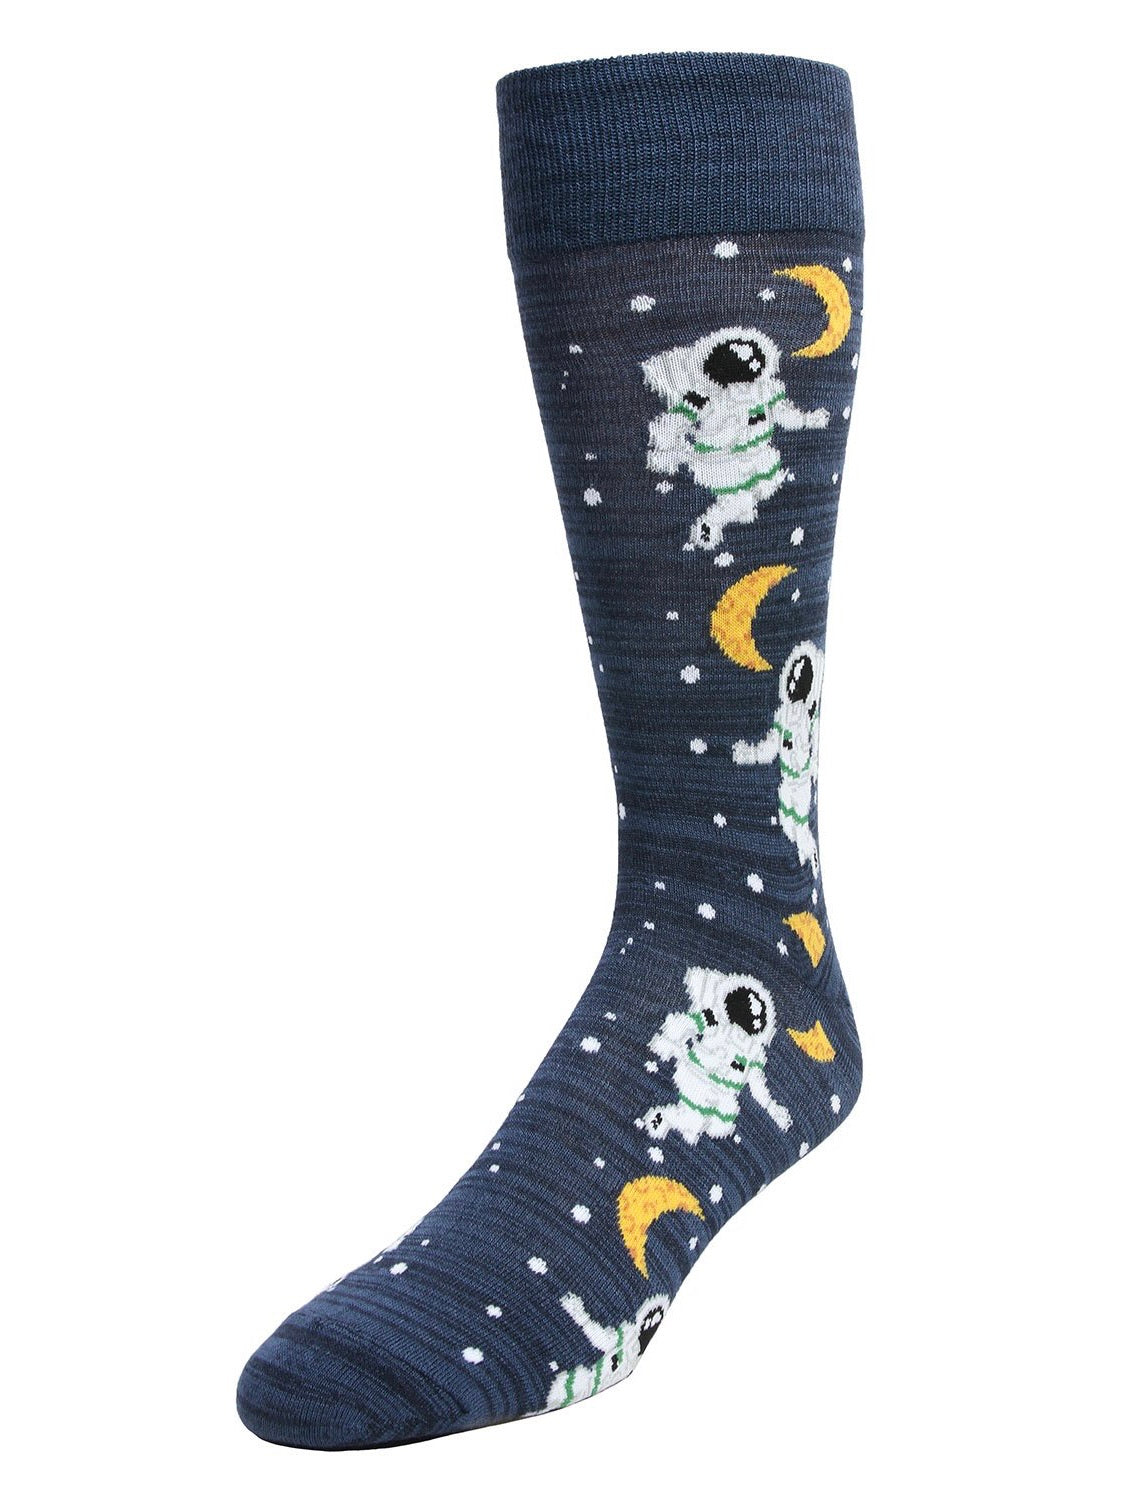 Men’s Stellar Moonwalk Astronauts Bamboo Blend Crew Socks Navy Blazer